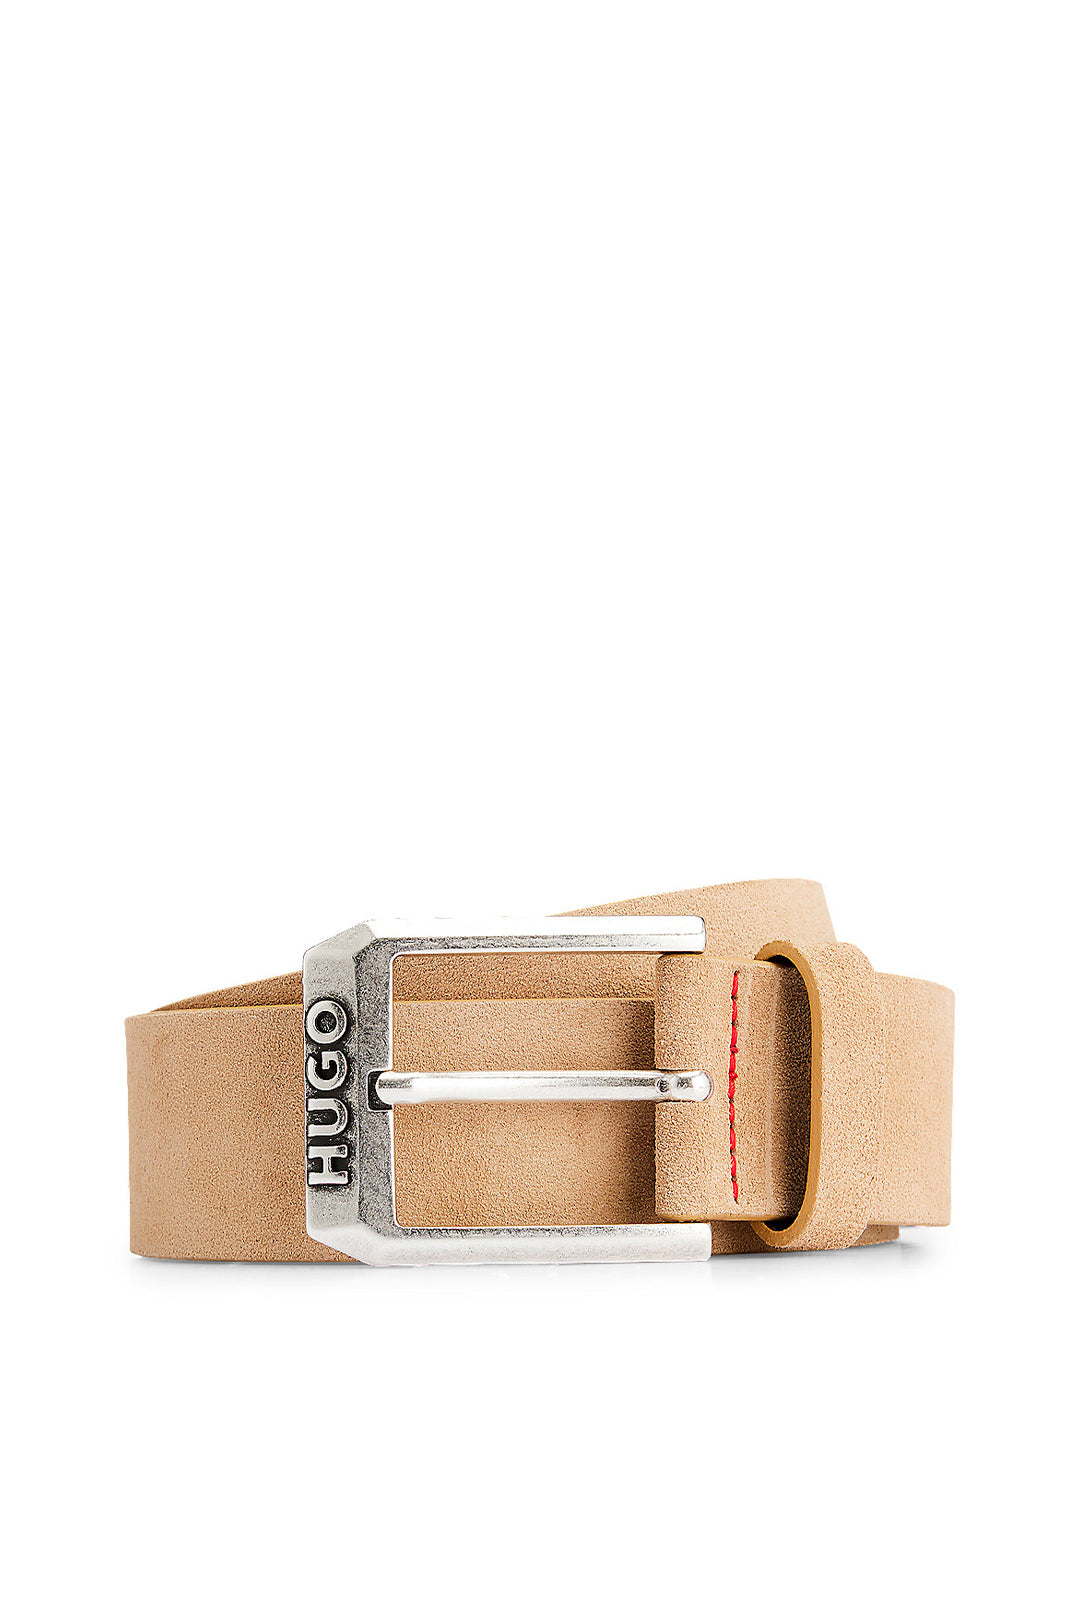 Hugo Boss belt in Tan color (Hugo-50480427-224)